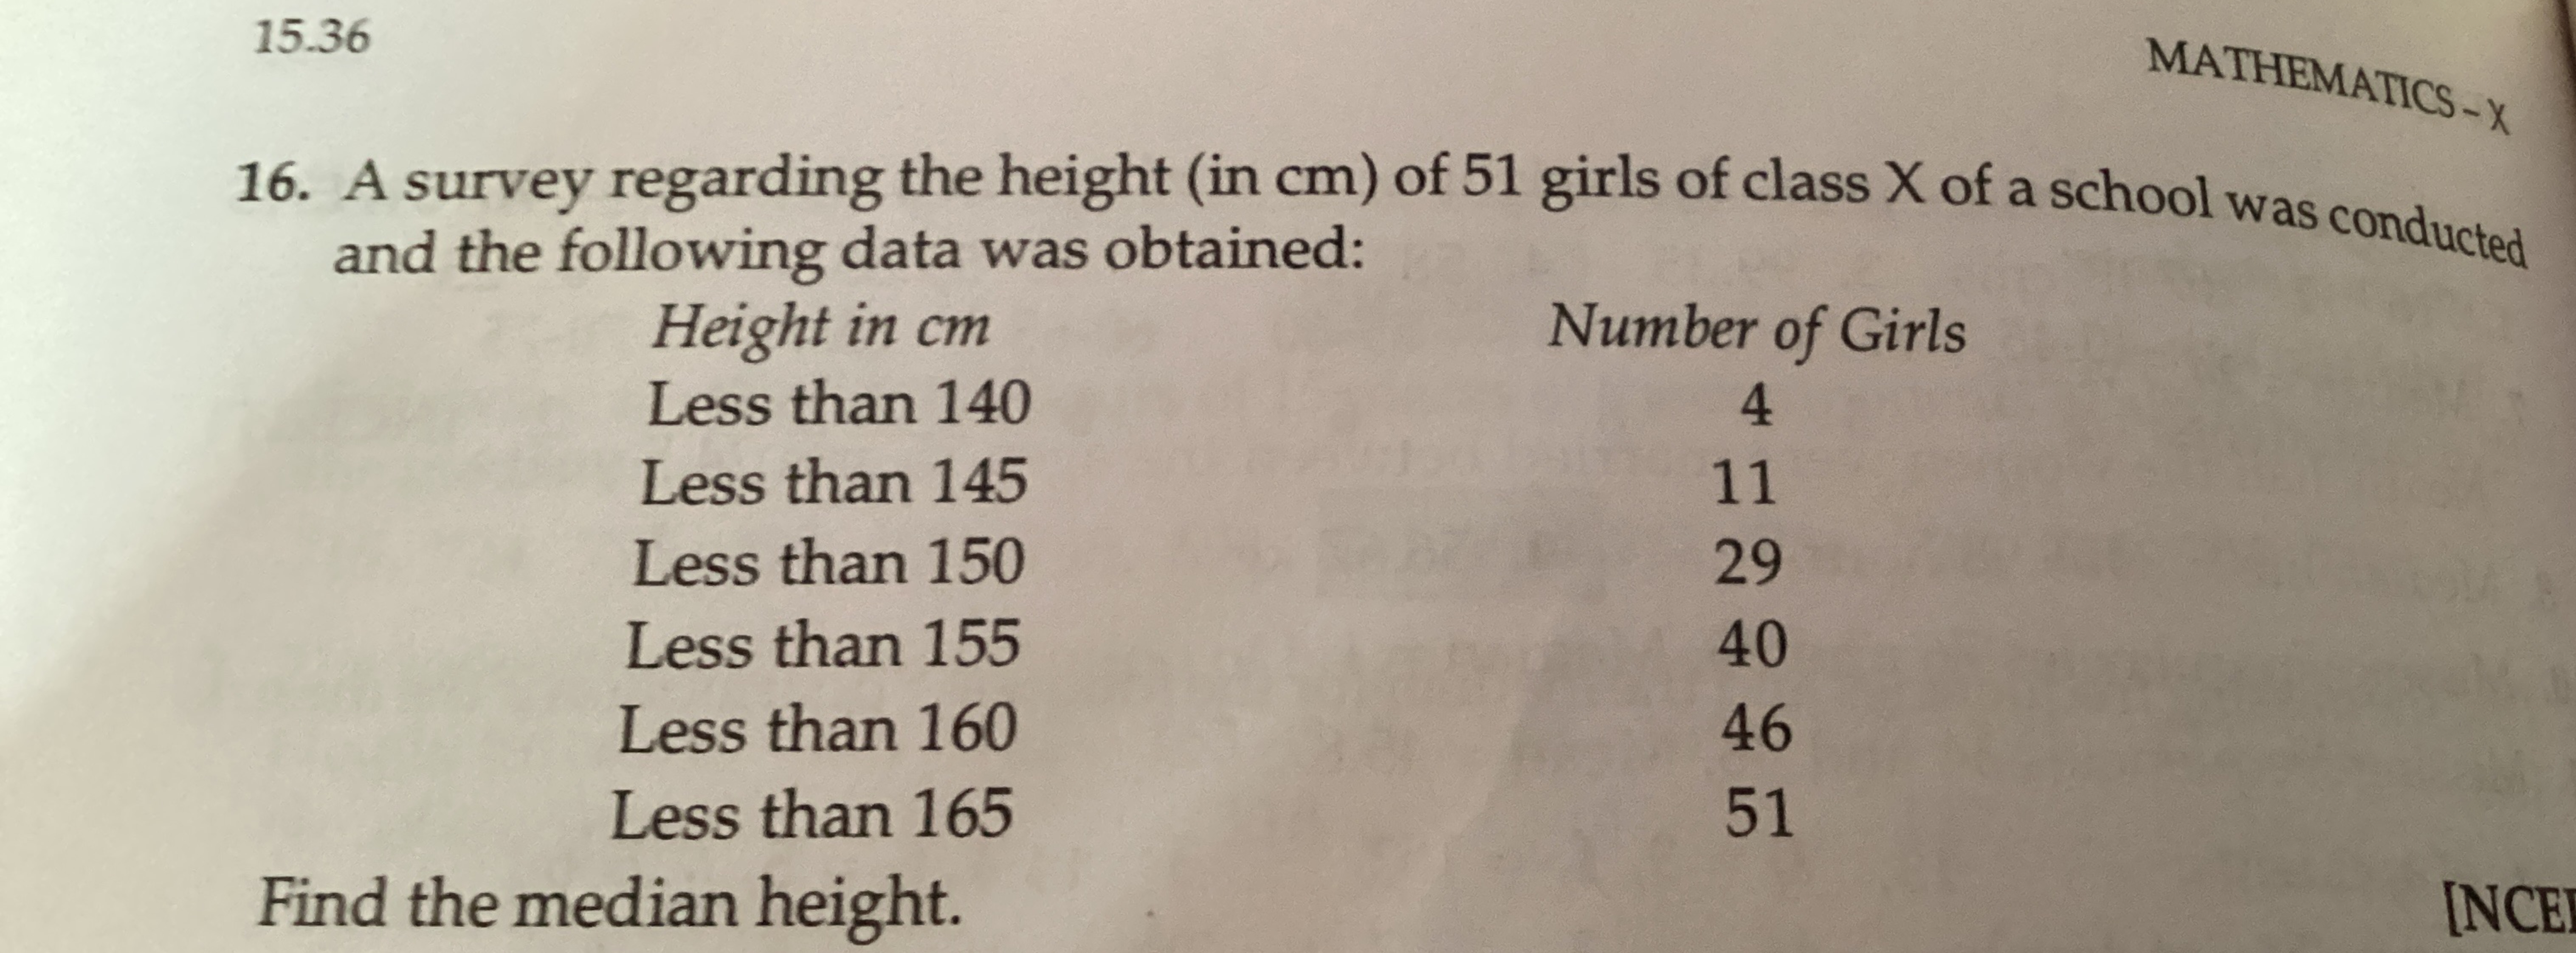 15.36
MATHEMATICS - x
16. A survey regarding the height (in cm ) of 51